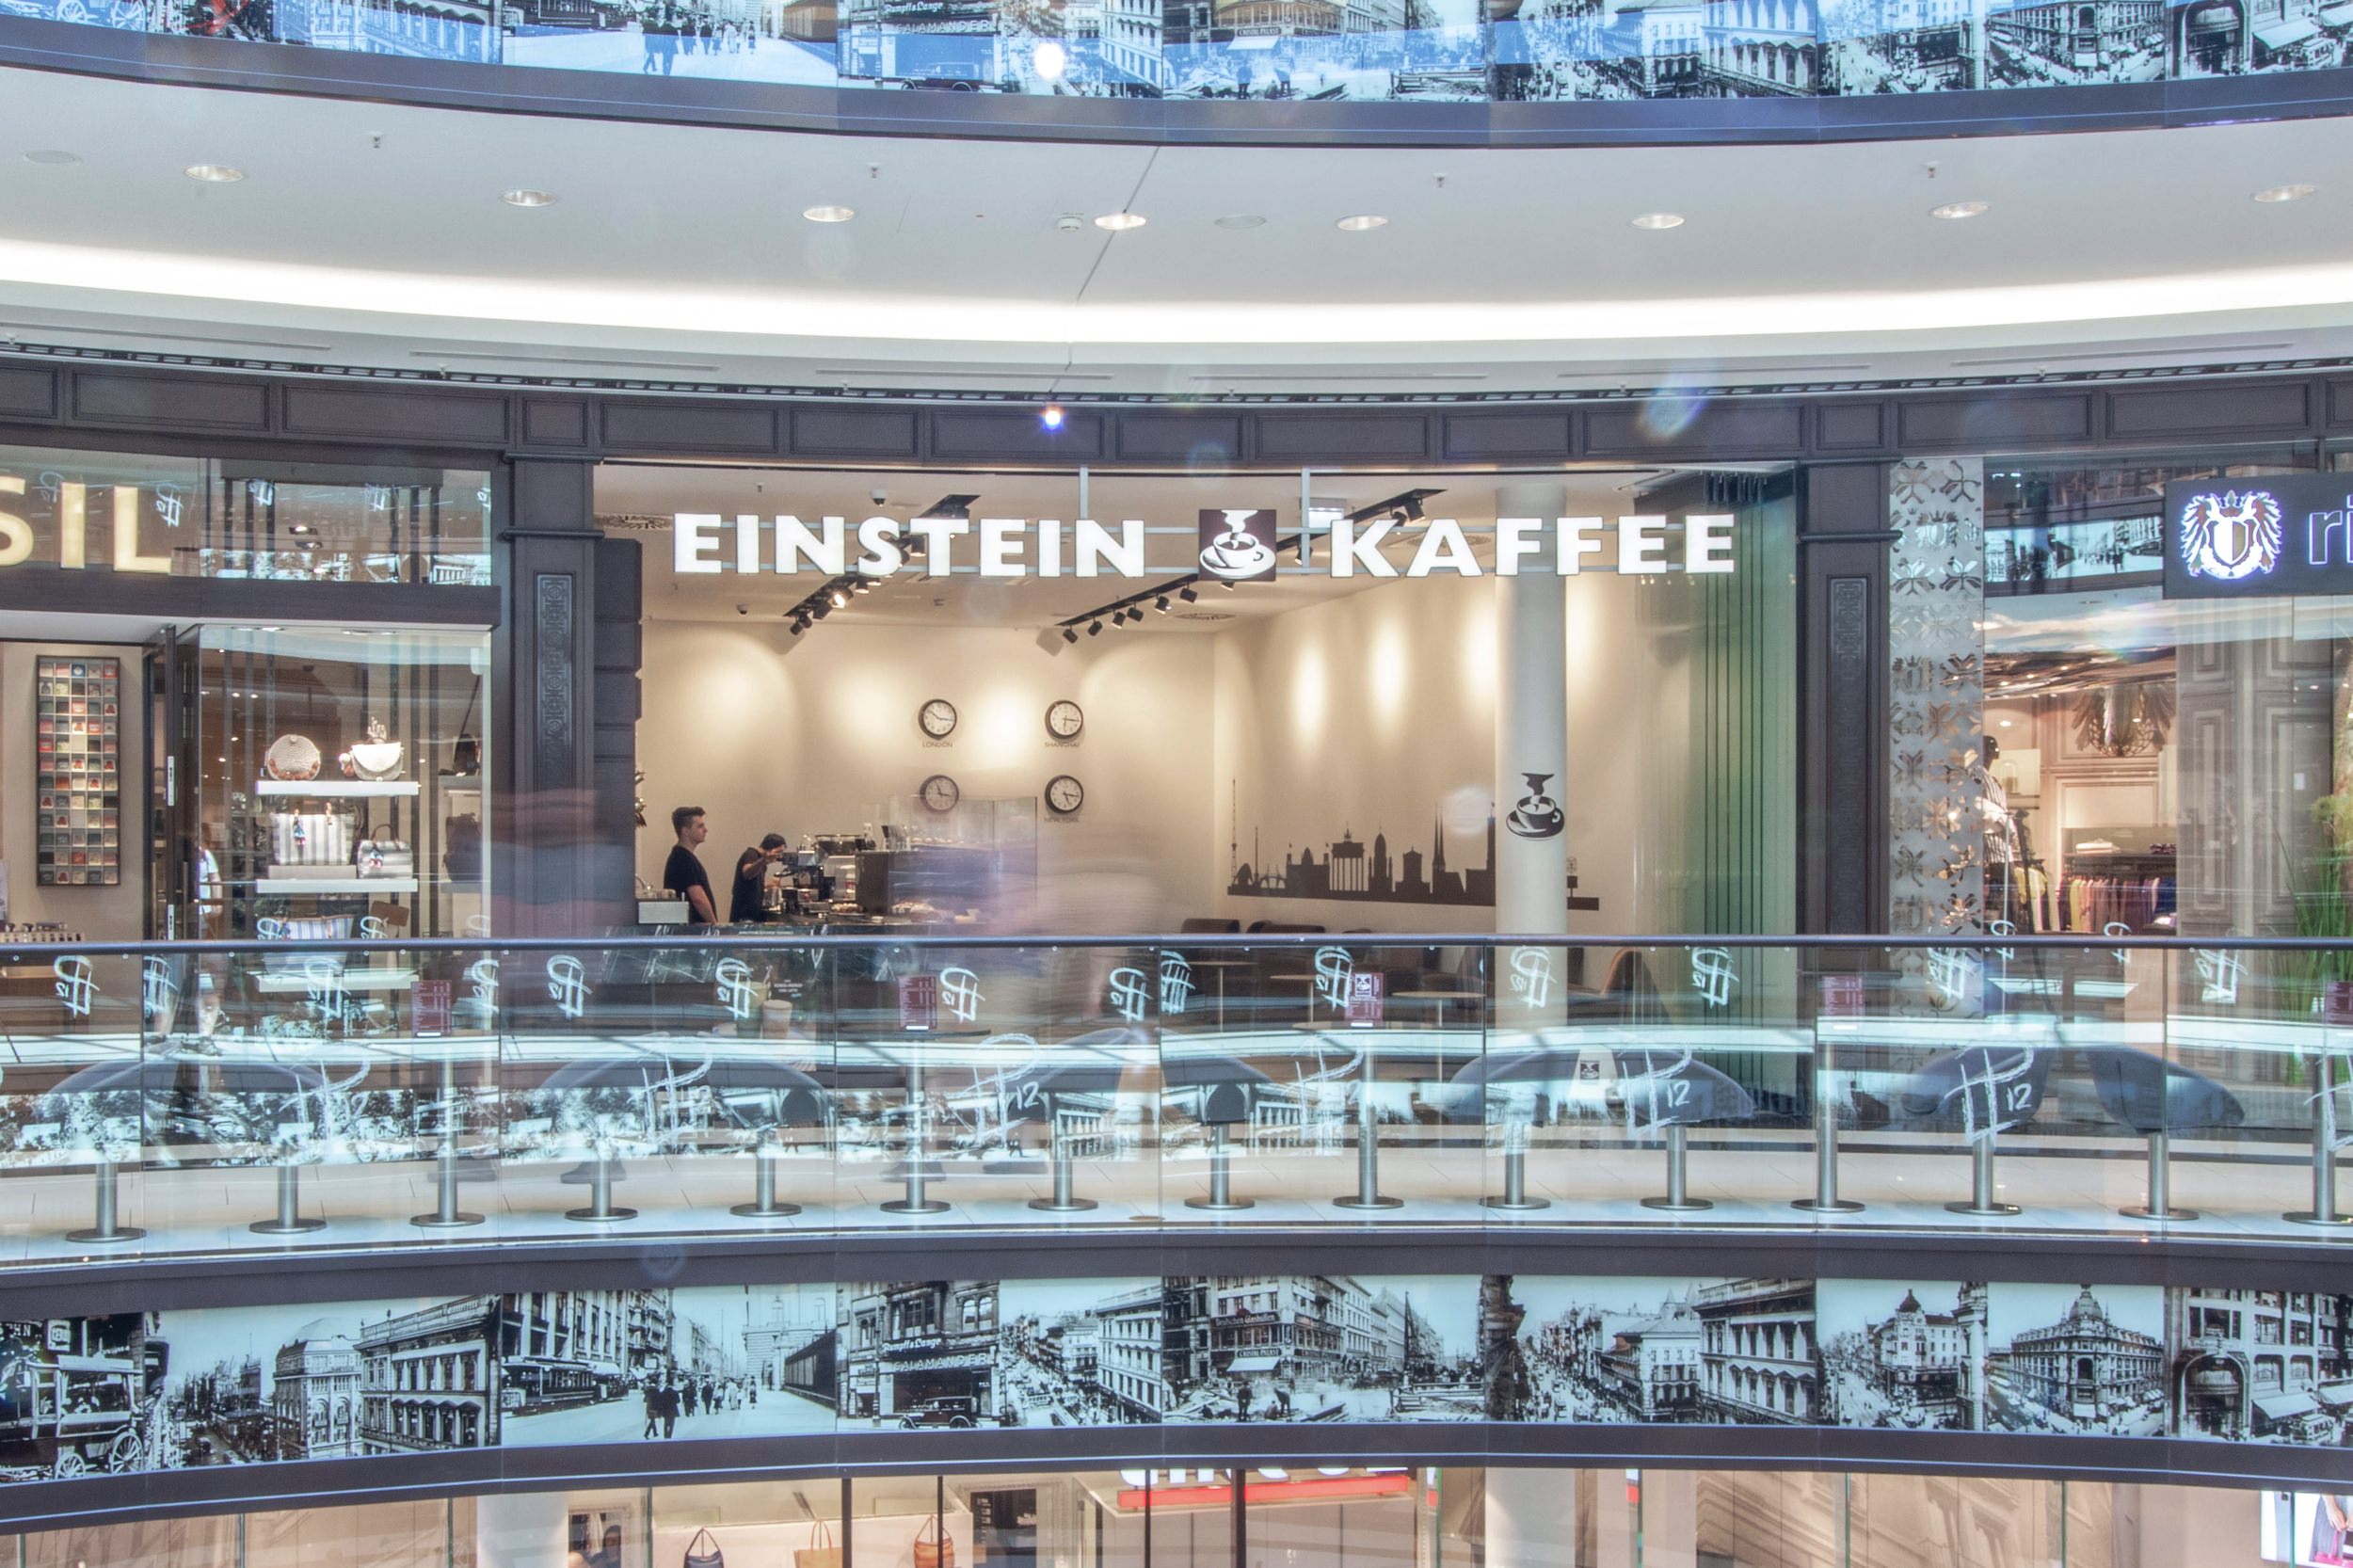 Einstein Kaffee at the Mall of Berlin